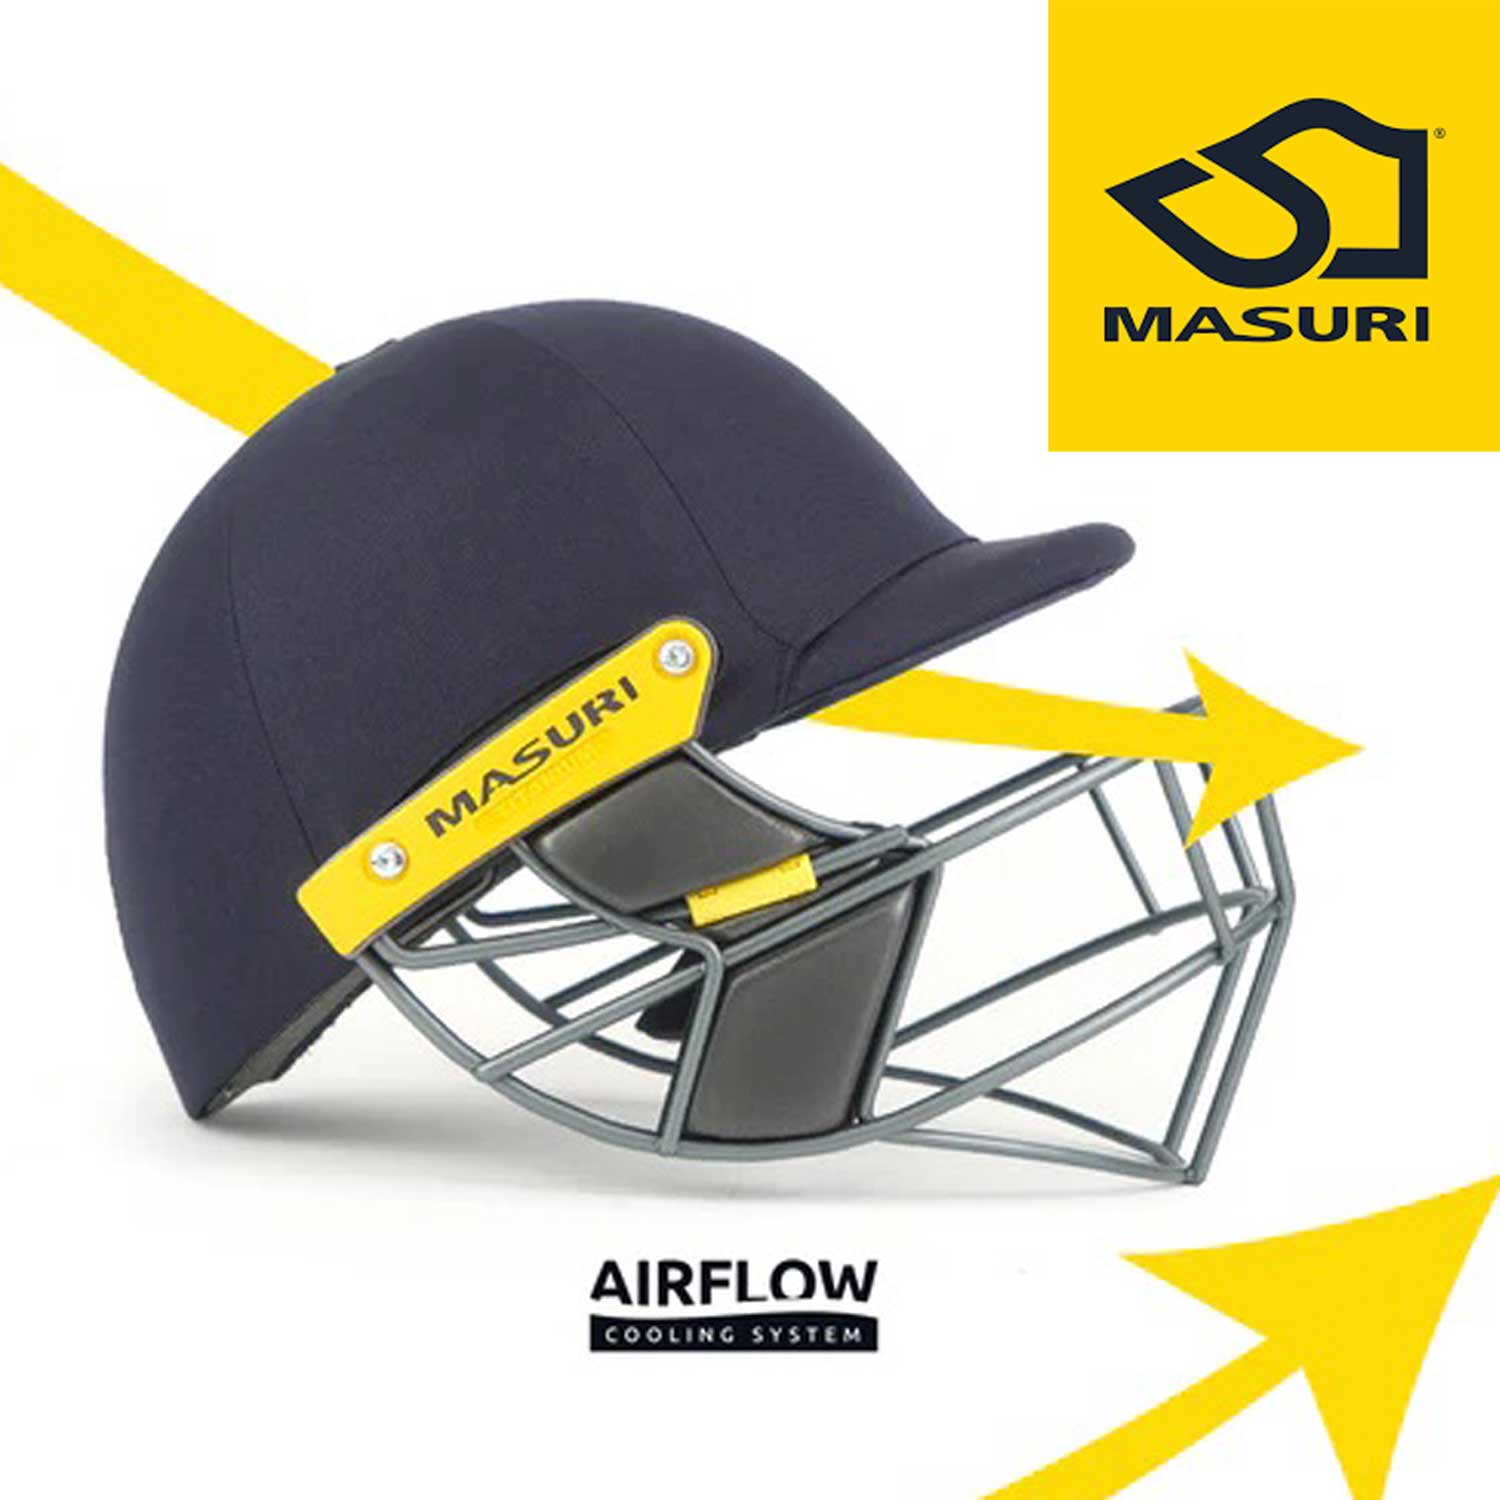 Masuri T-Line Cricket Helmet OS Test Junior